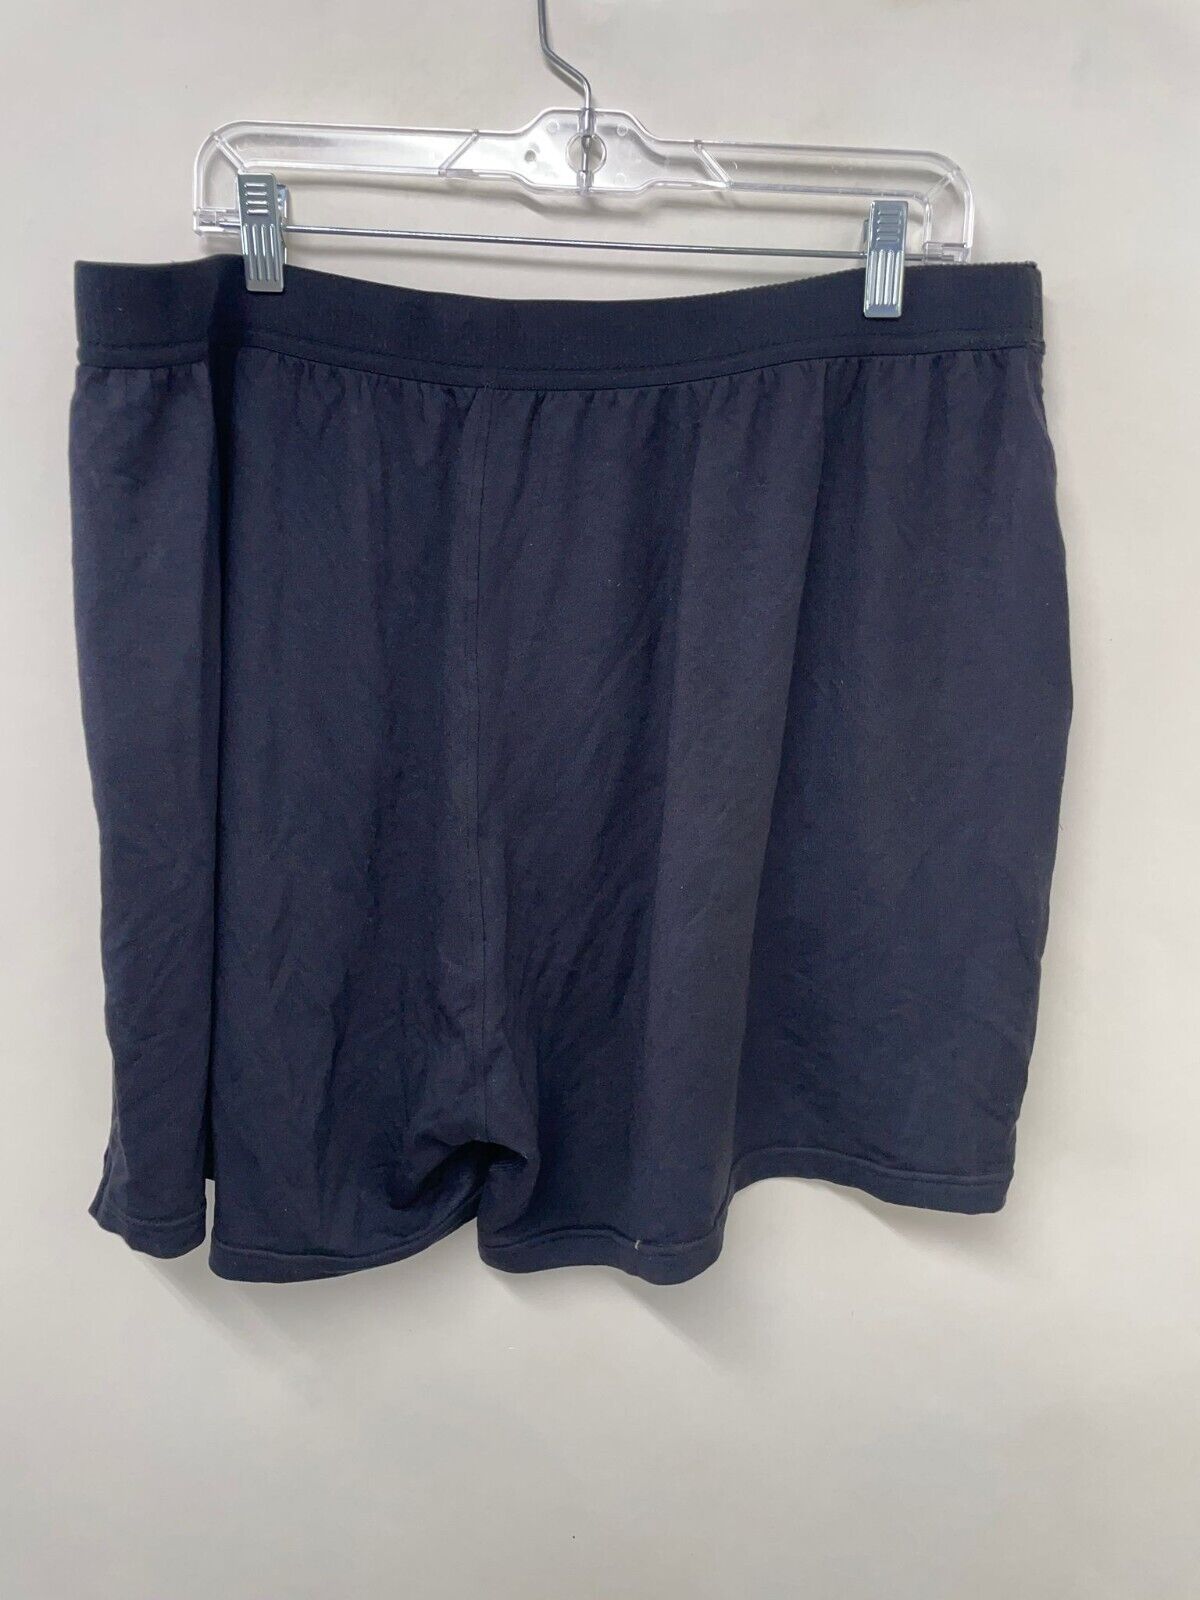 Jambys Mens XXL Boxers Shorts with Pockets Underwear Black Unisex Loungewear